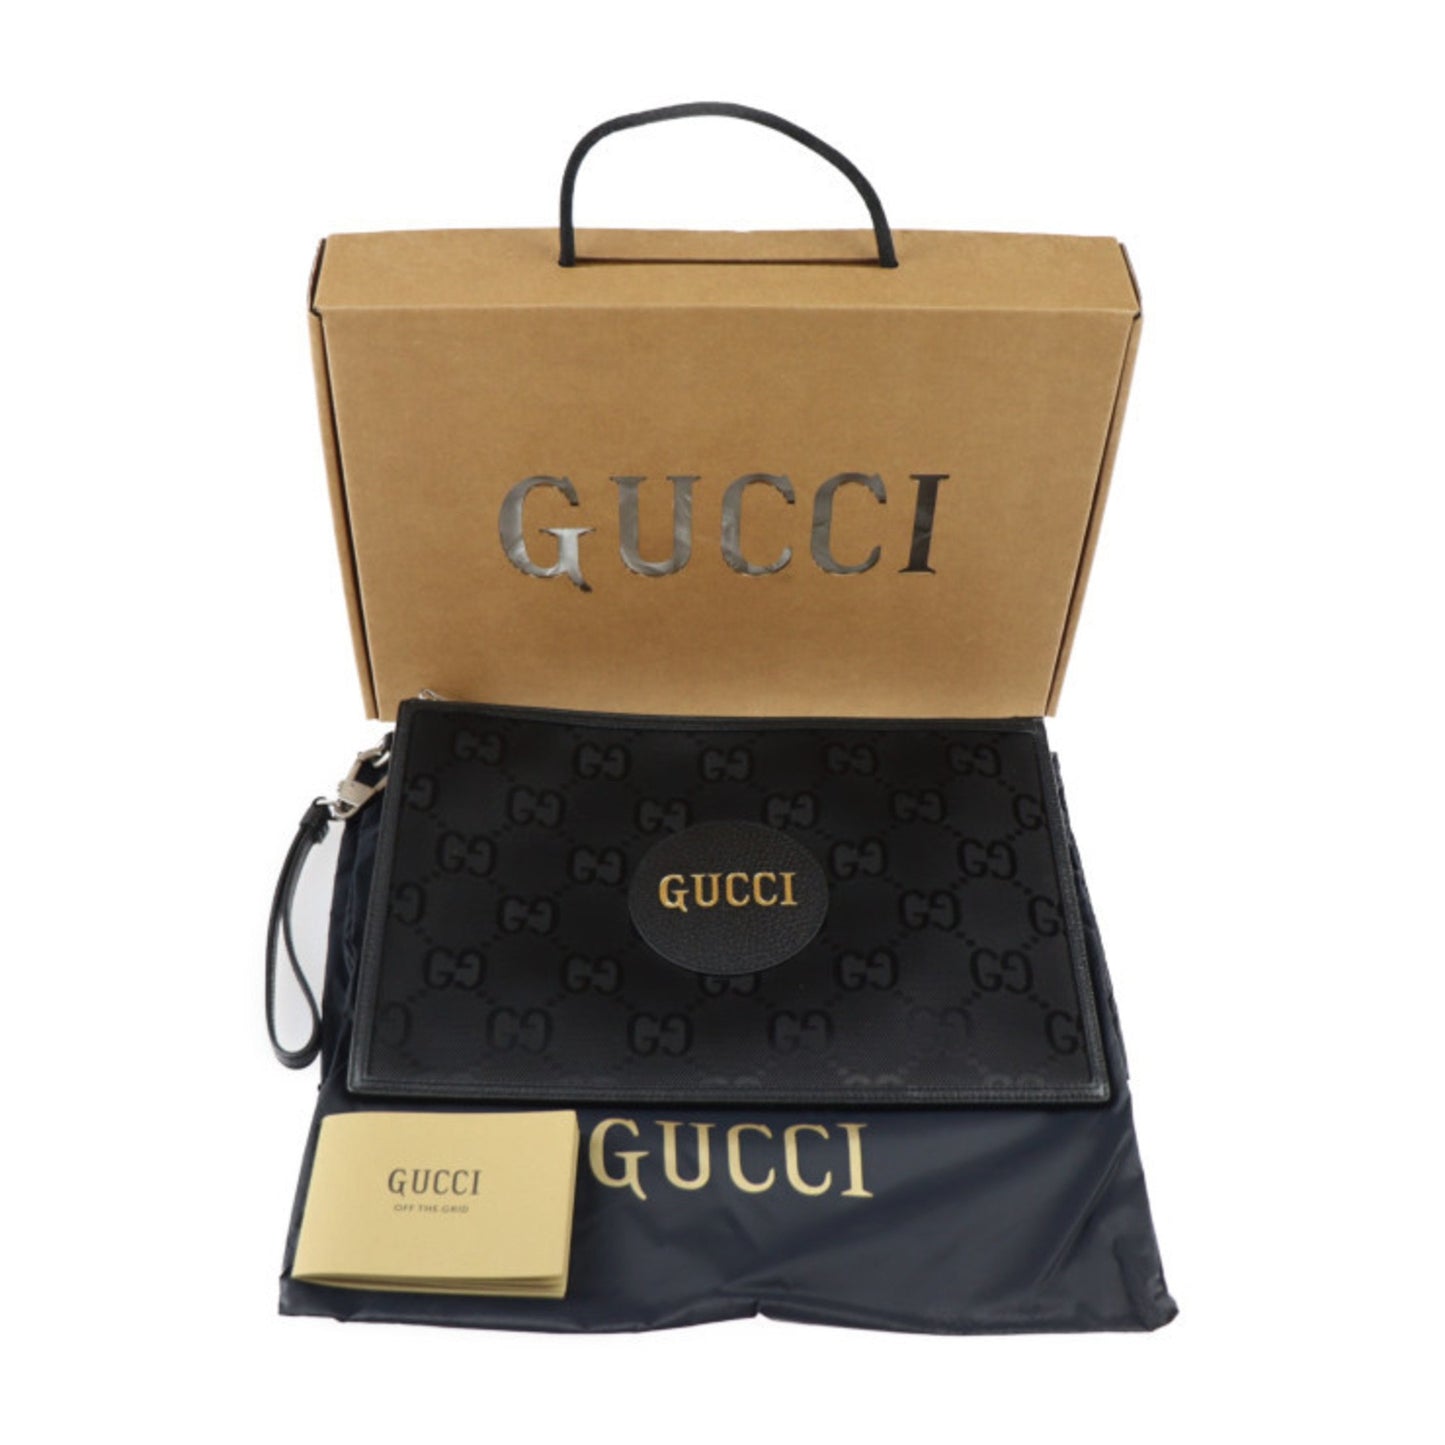 Gucci Men's Versatile Black Nylon Clutch Bag for Modern Men in Black